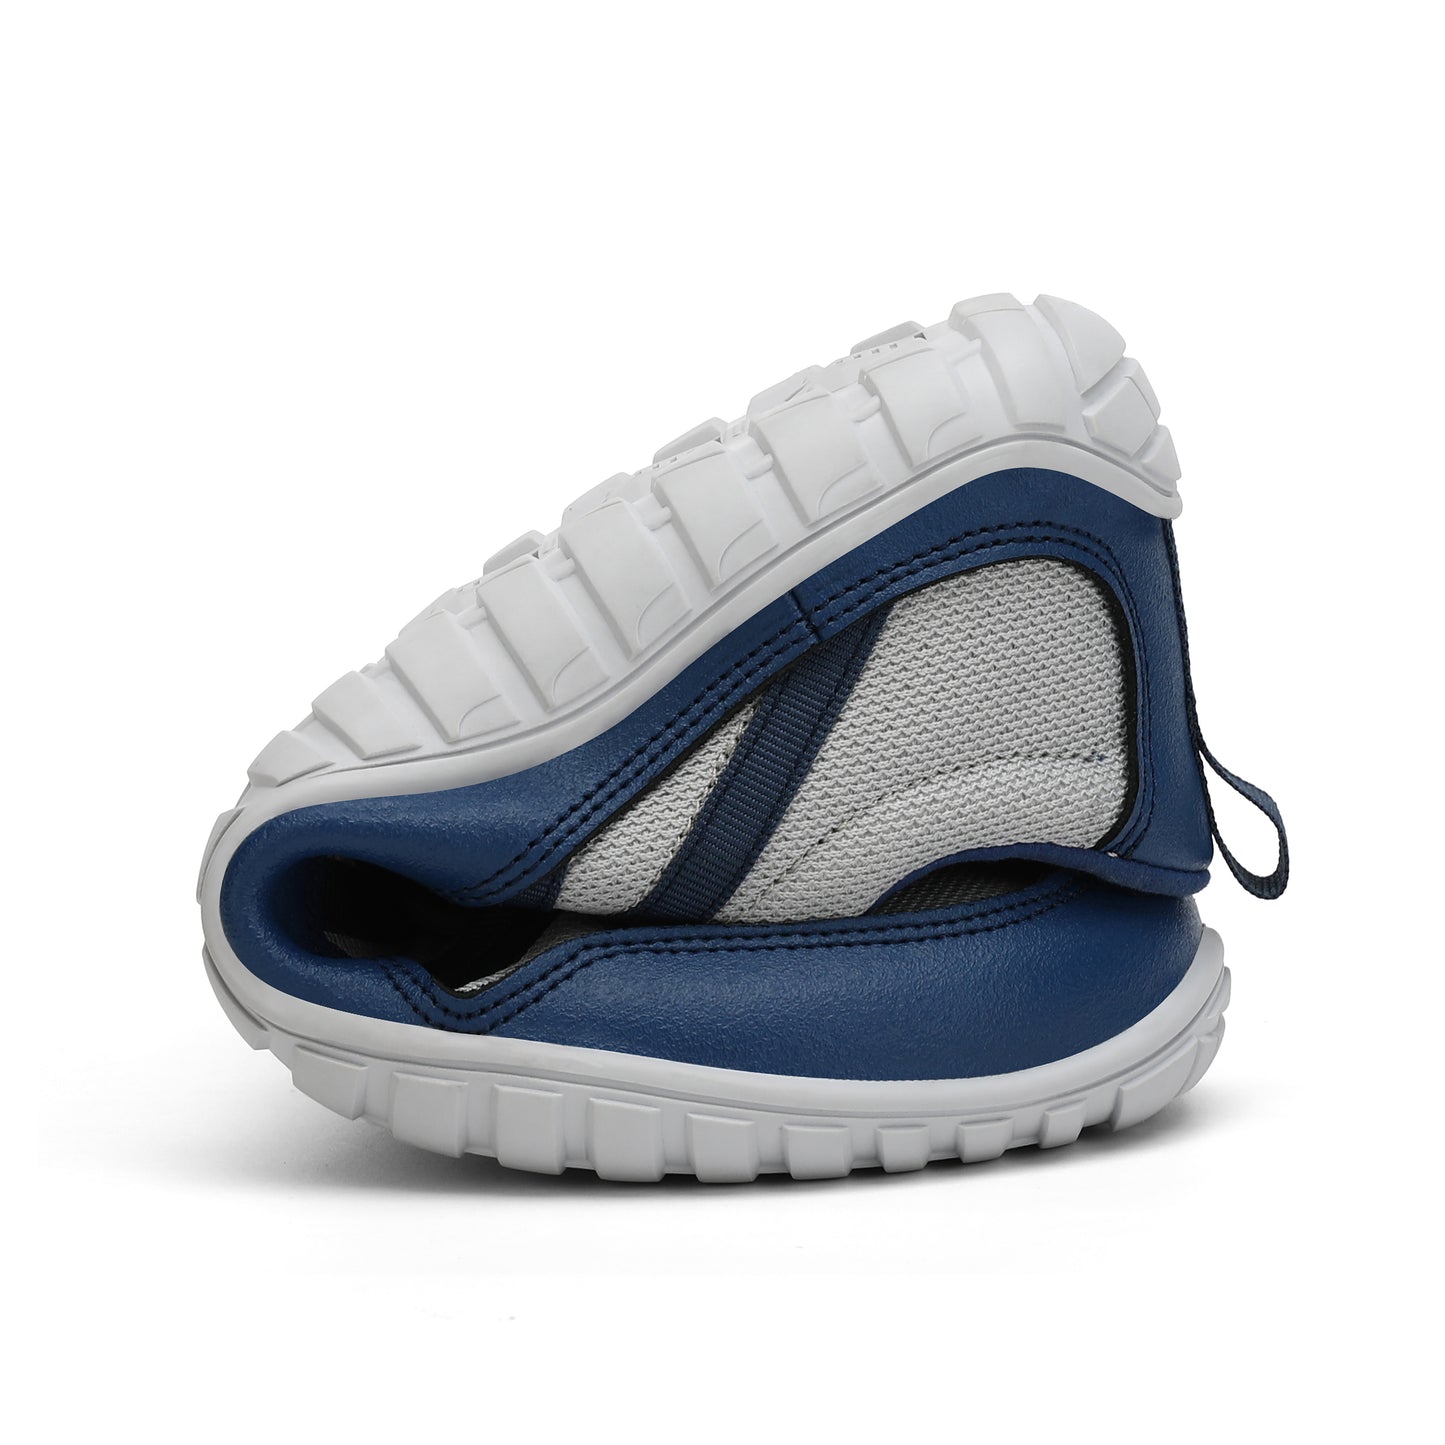 Forestep I - Azul - Barefoot shoes